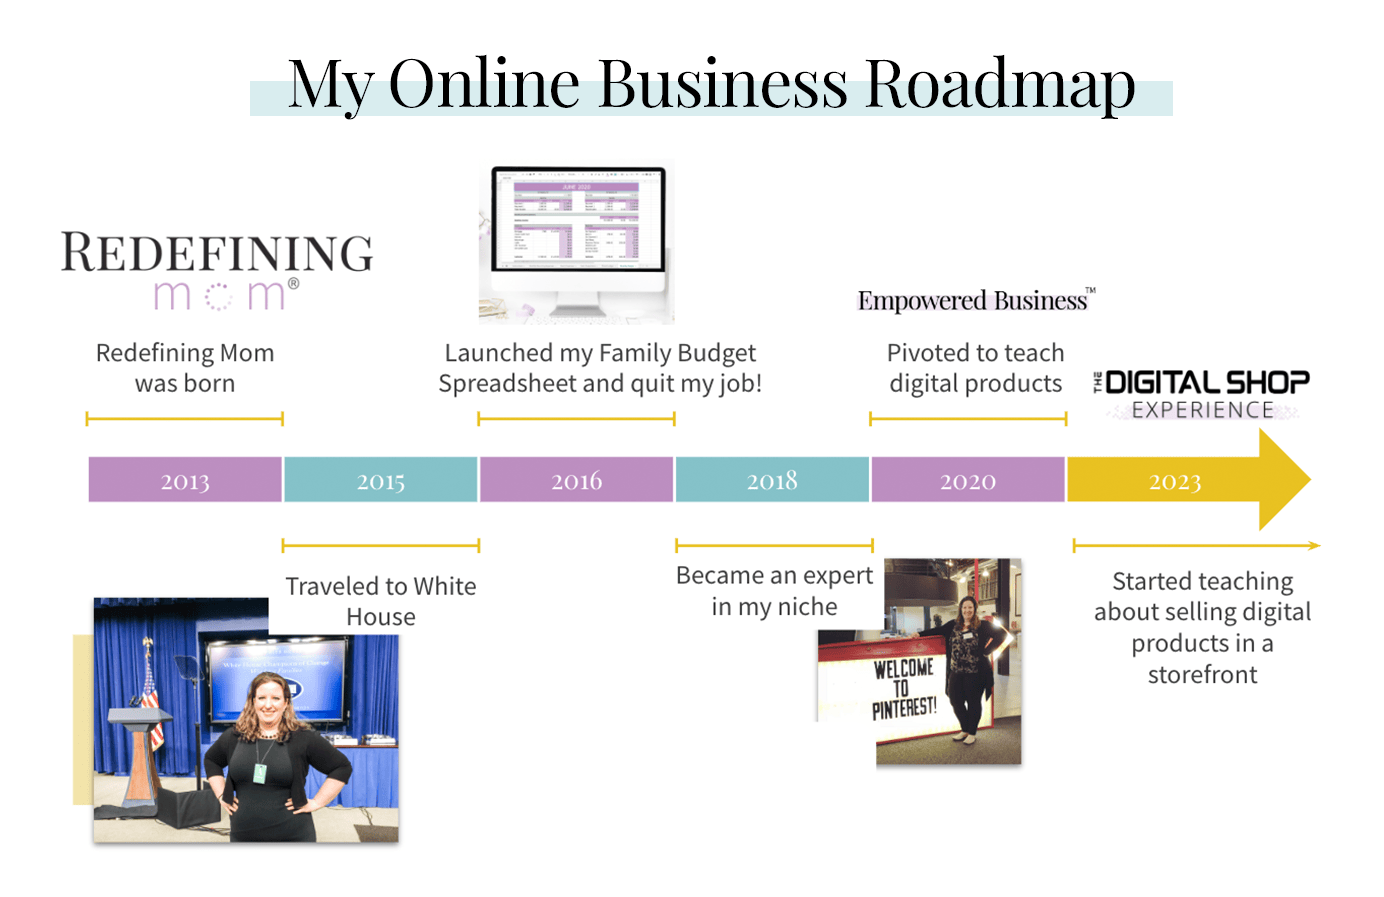 My Online Business Roadmap through 2023